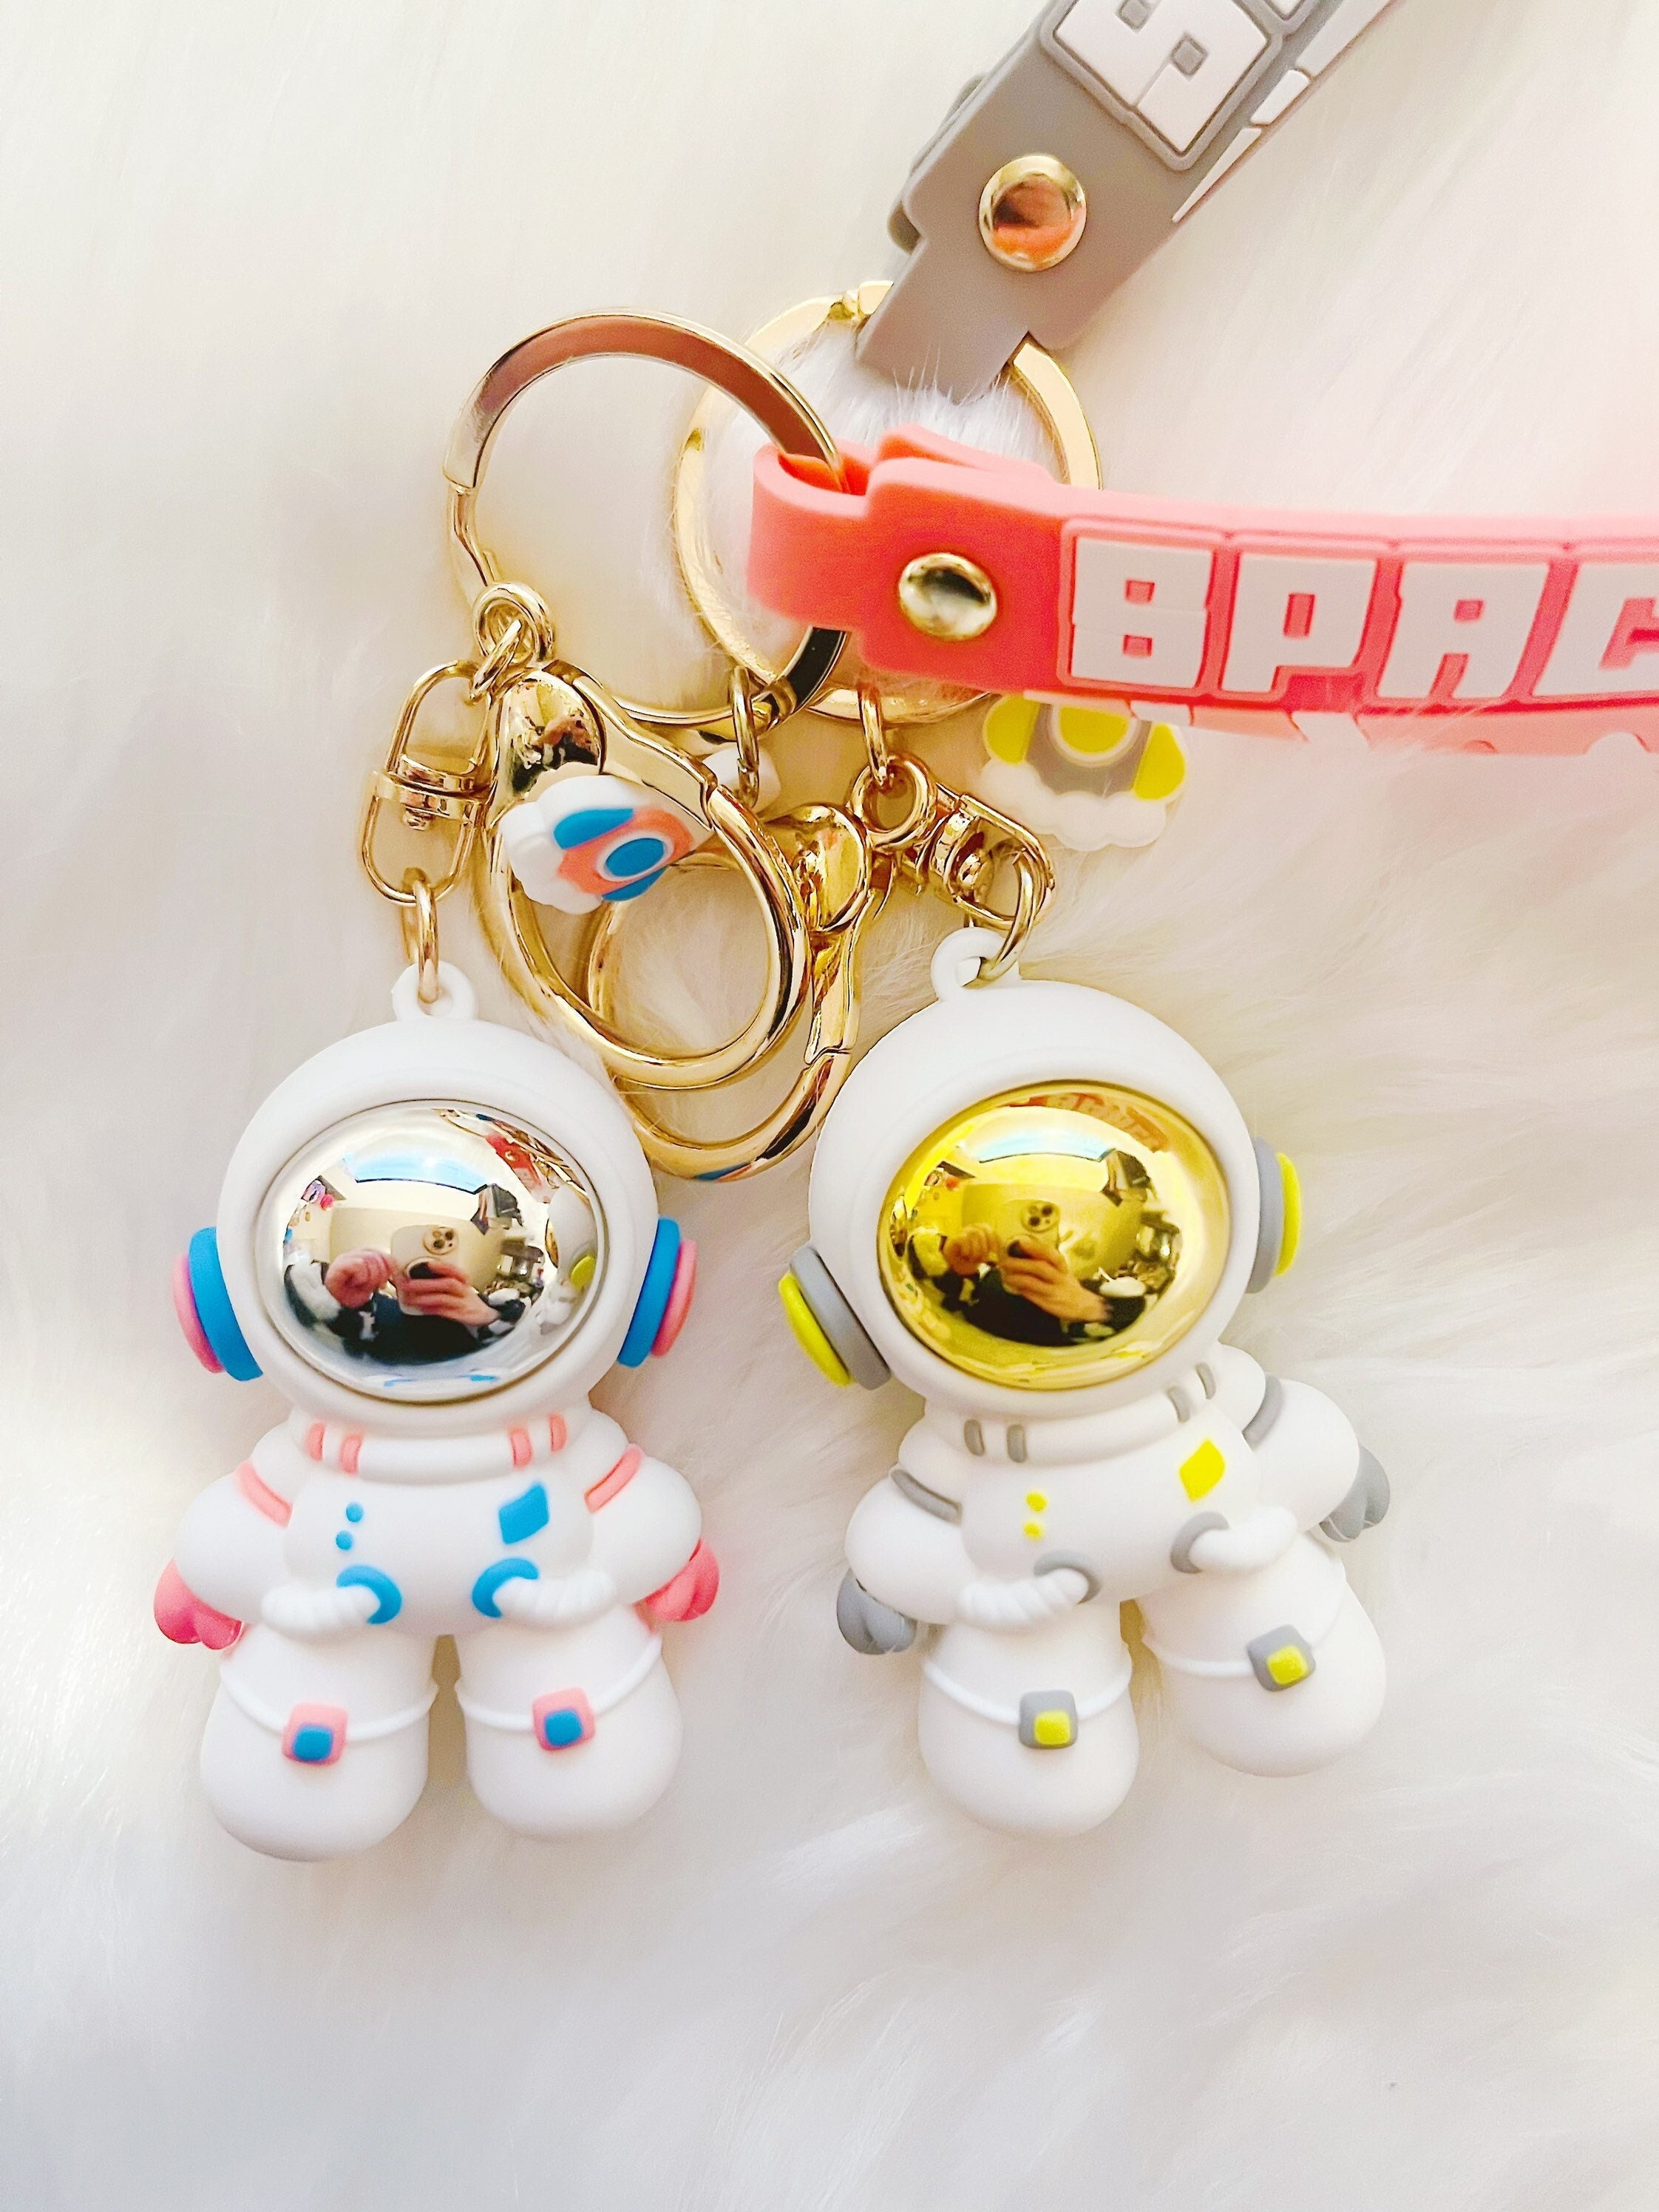 Fashion Cartoon Space Astronaut Keychain Female Cute Creative Epoxy  Astronaut Key Chain Ring Bag Charm Pendant Birthday Gift